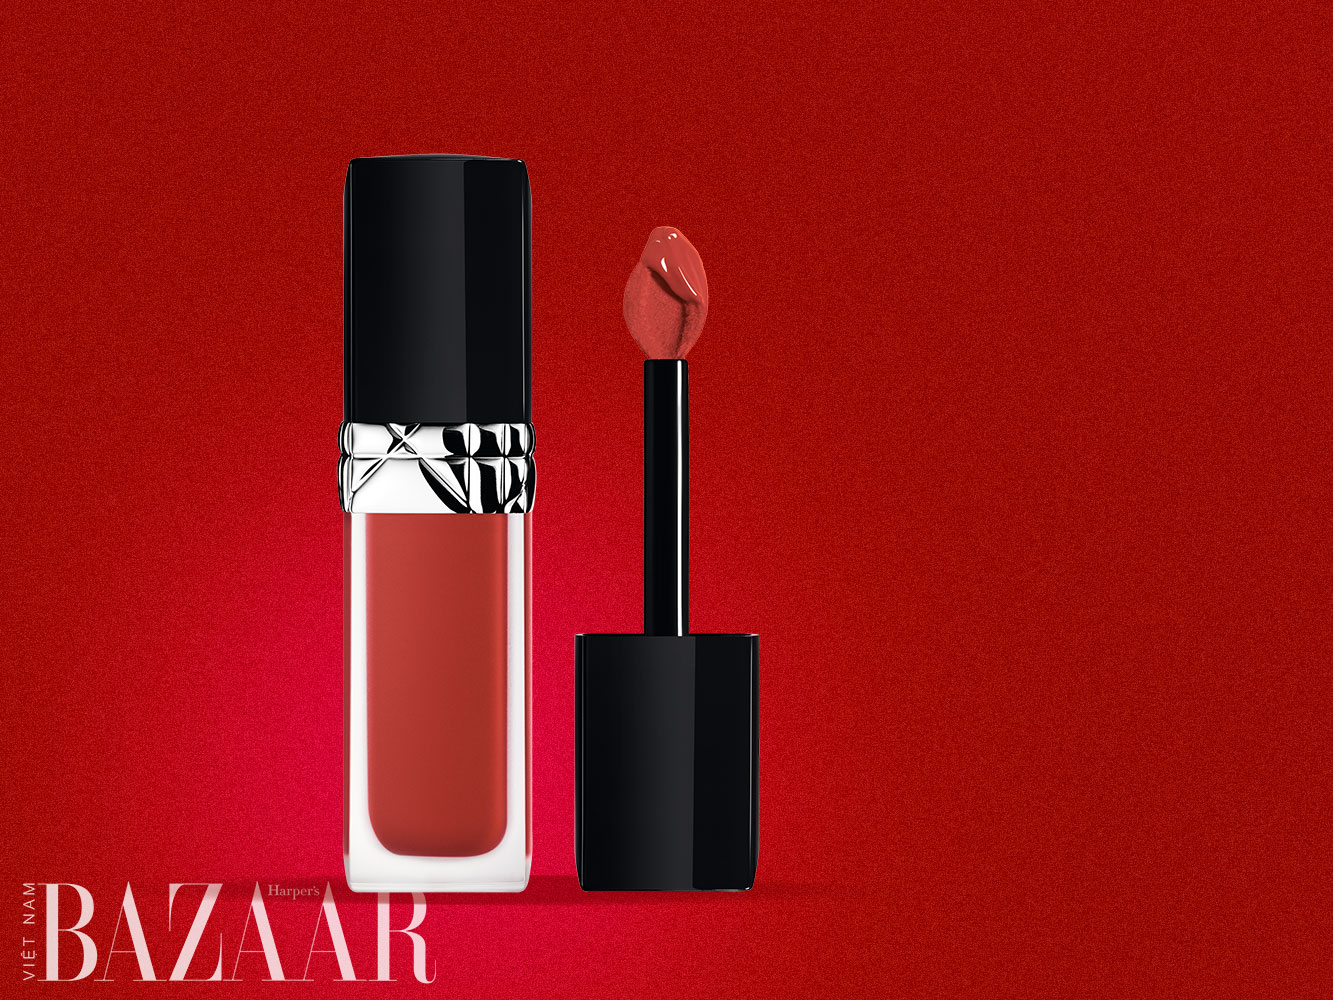 Son Dior Rouge Lipstick  Full bảng màu son môi Dior  XACHTAYNHATNET